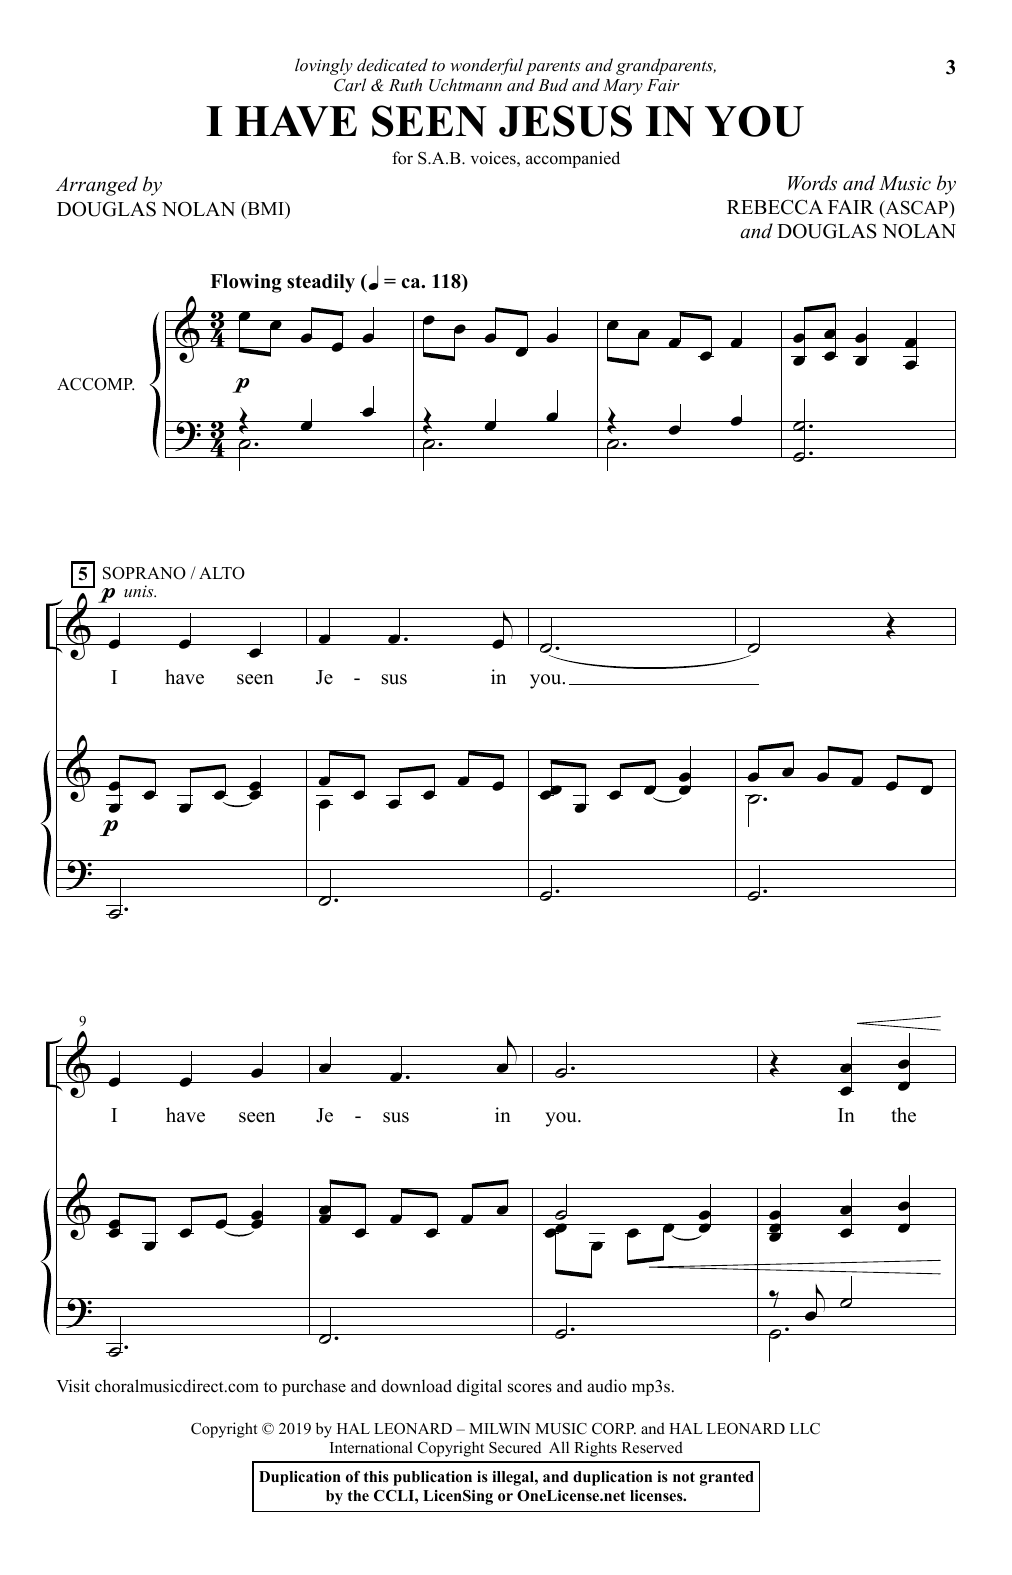 Rebecca Fair I Have Seen Jesus In You (arr. Douglas Nolan) Sheet Music Notes & Chords for SAB Choir - Download or Print PDF